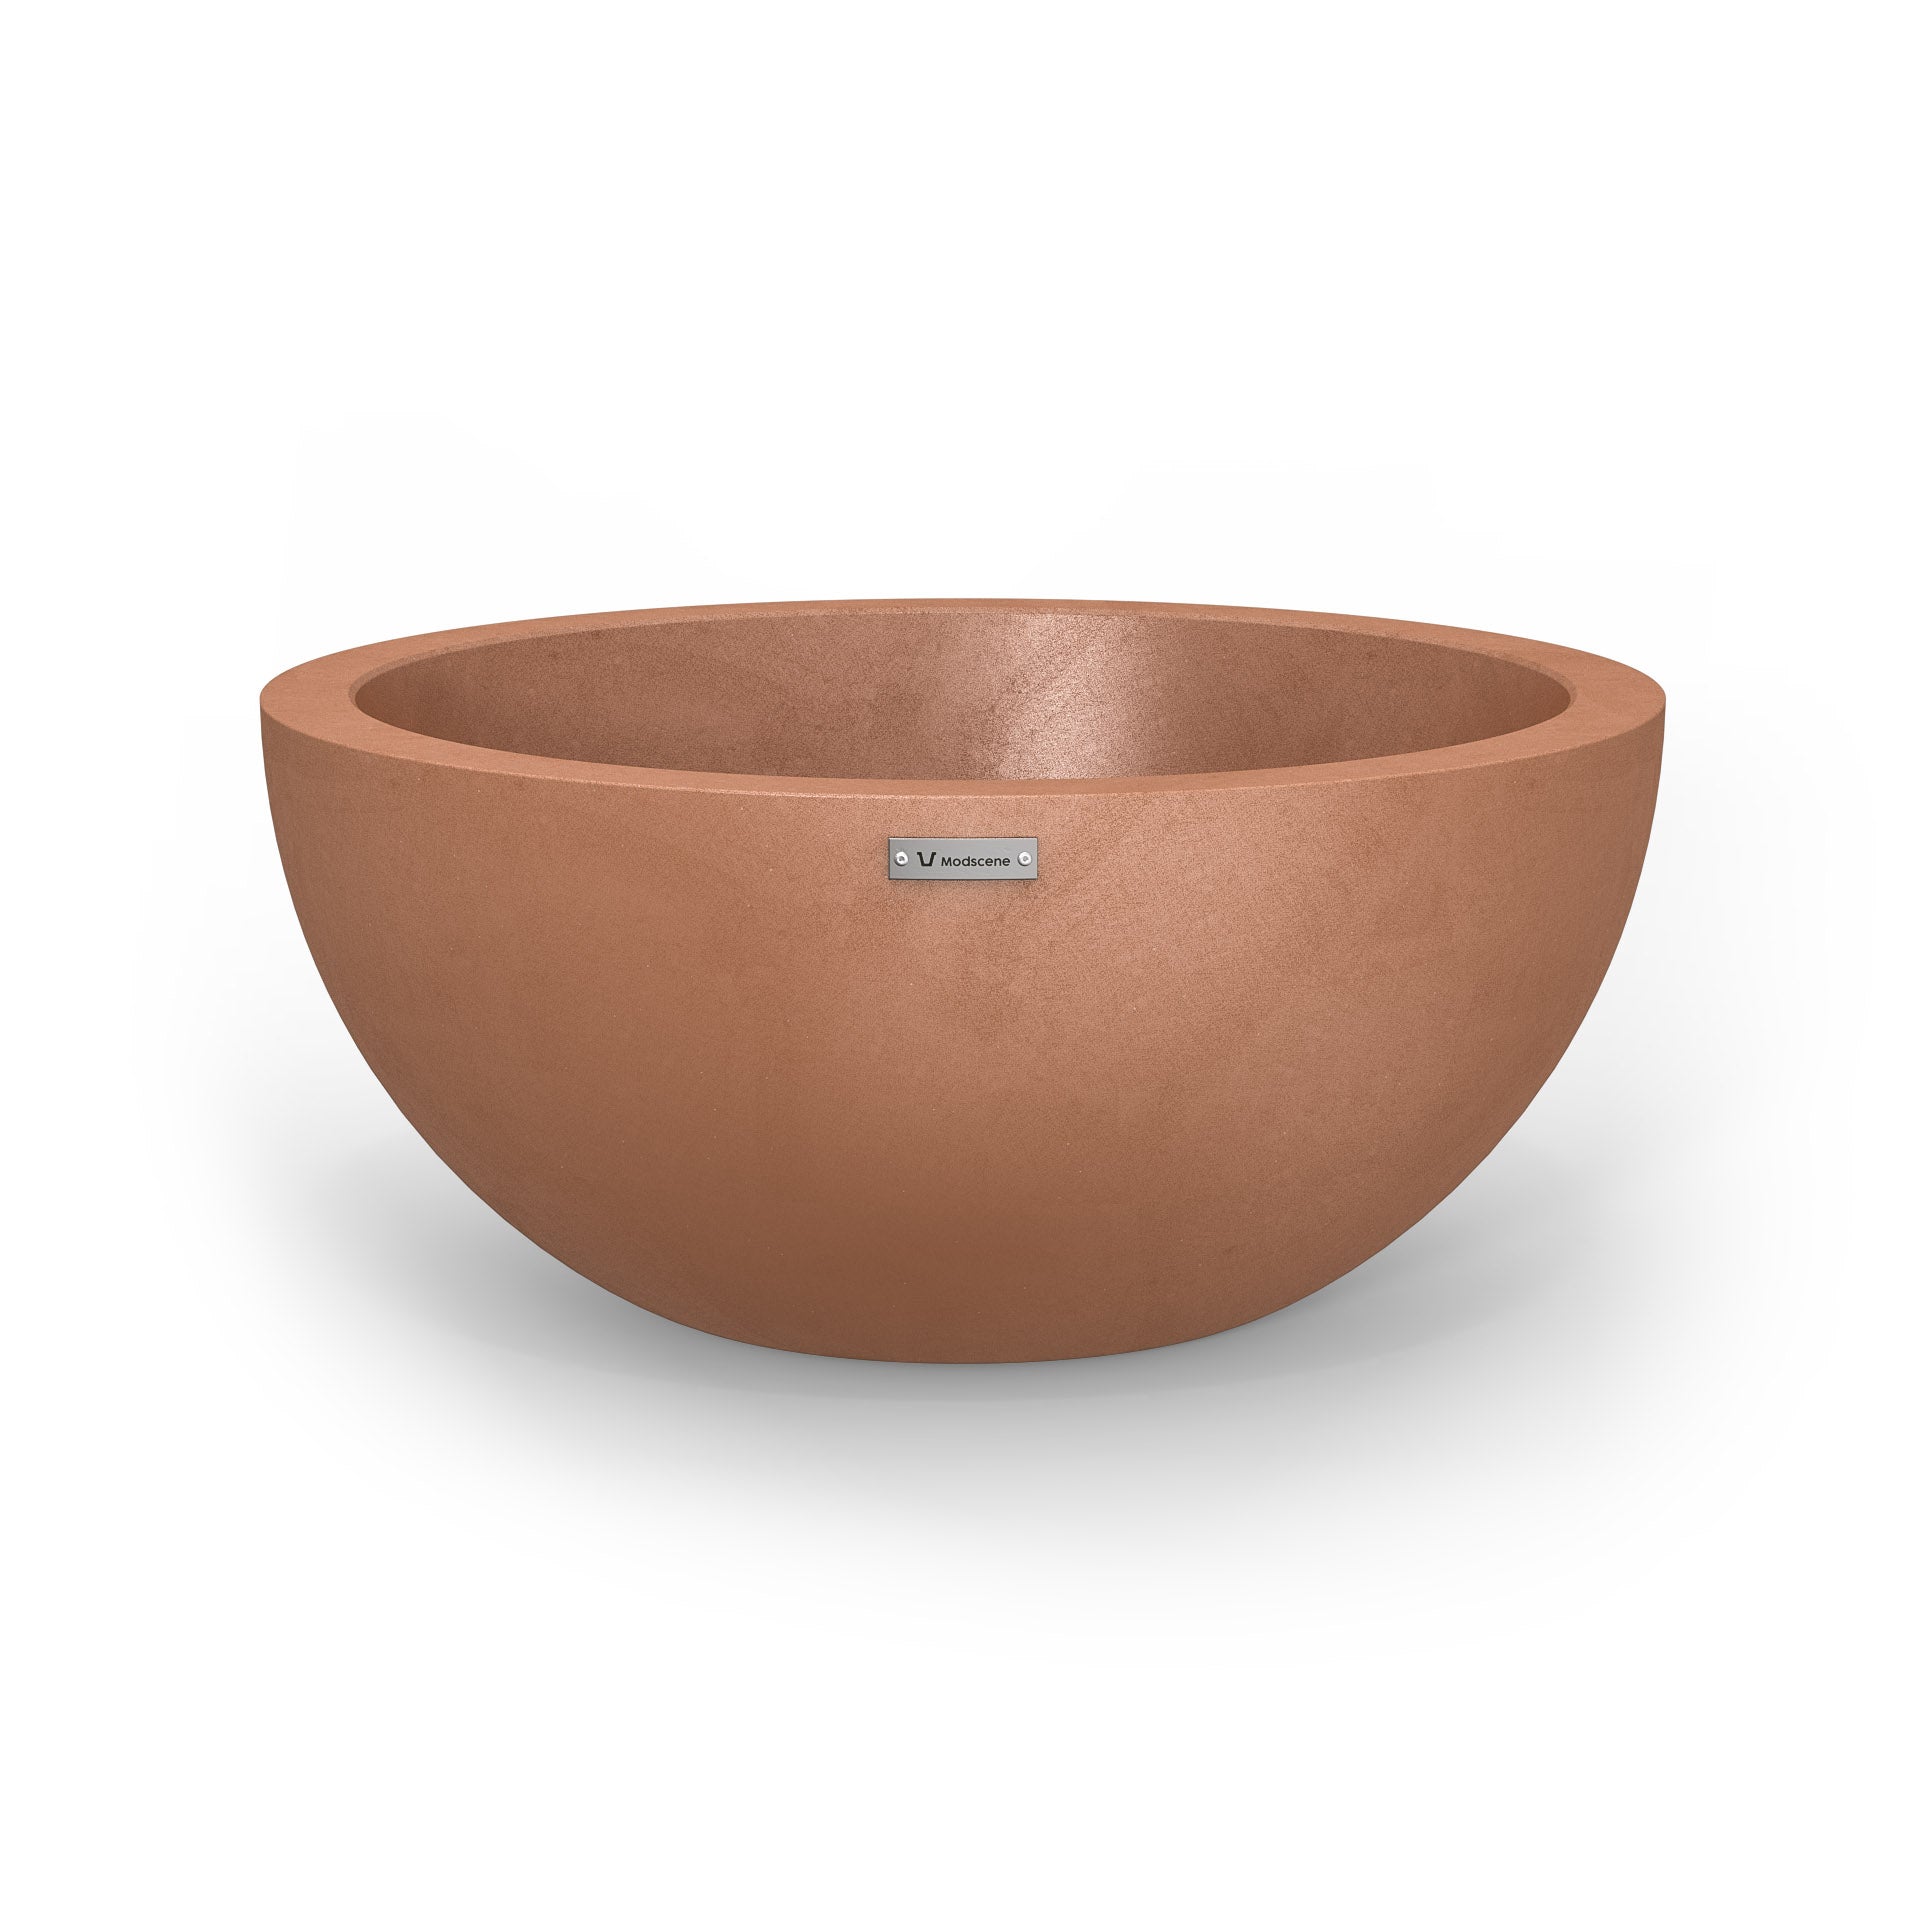 A medium sized Modscene planter bowl in rustic terracotta.